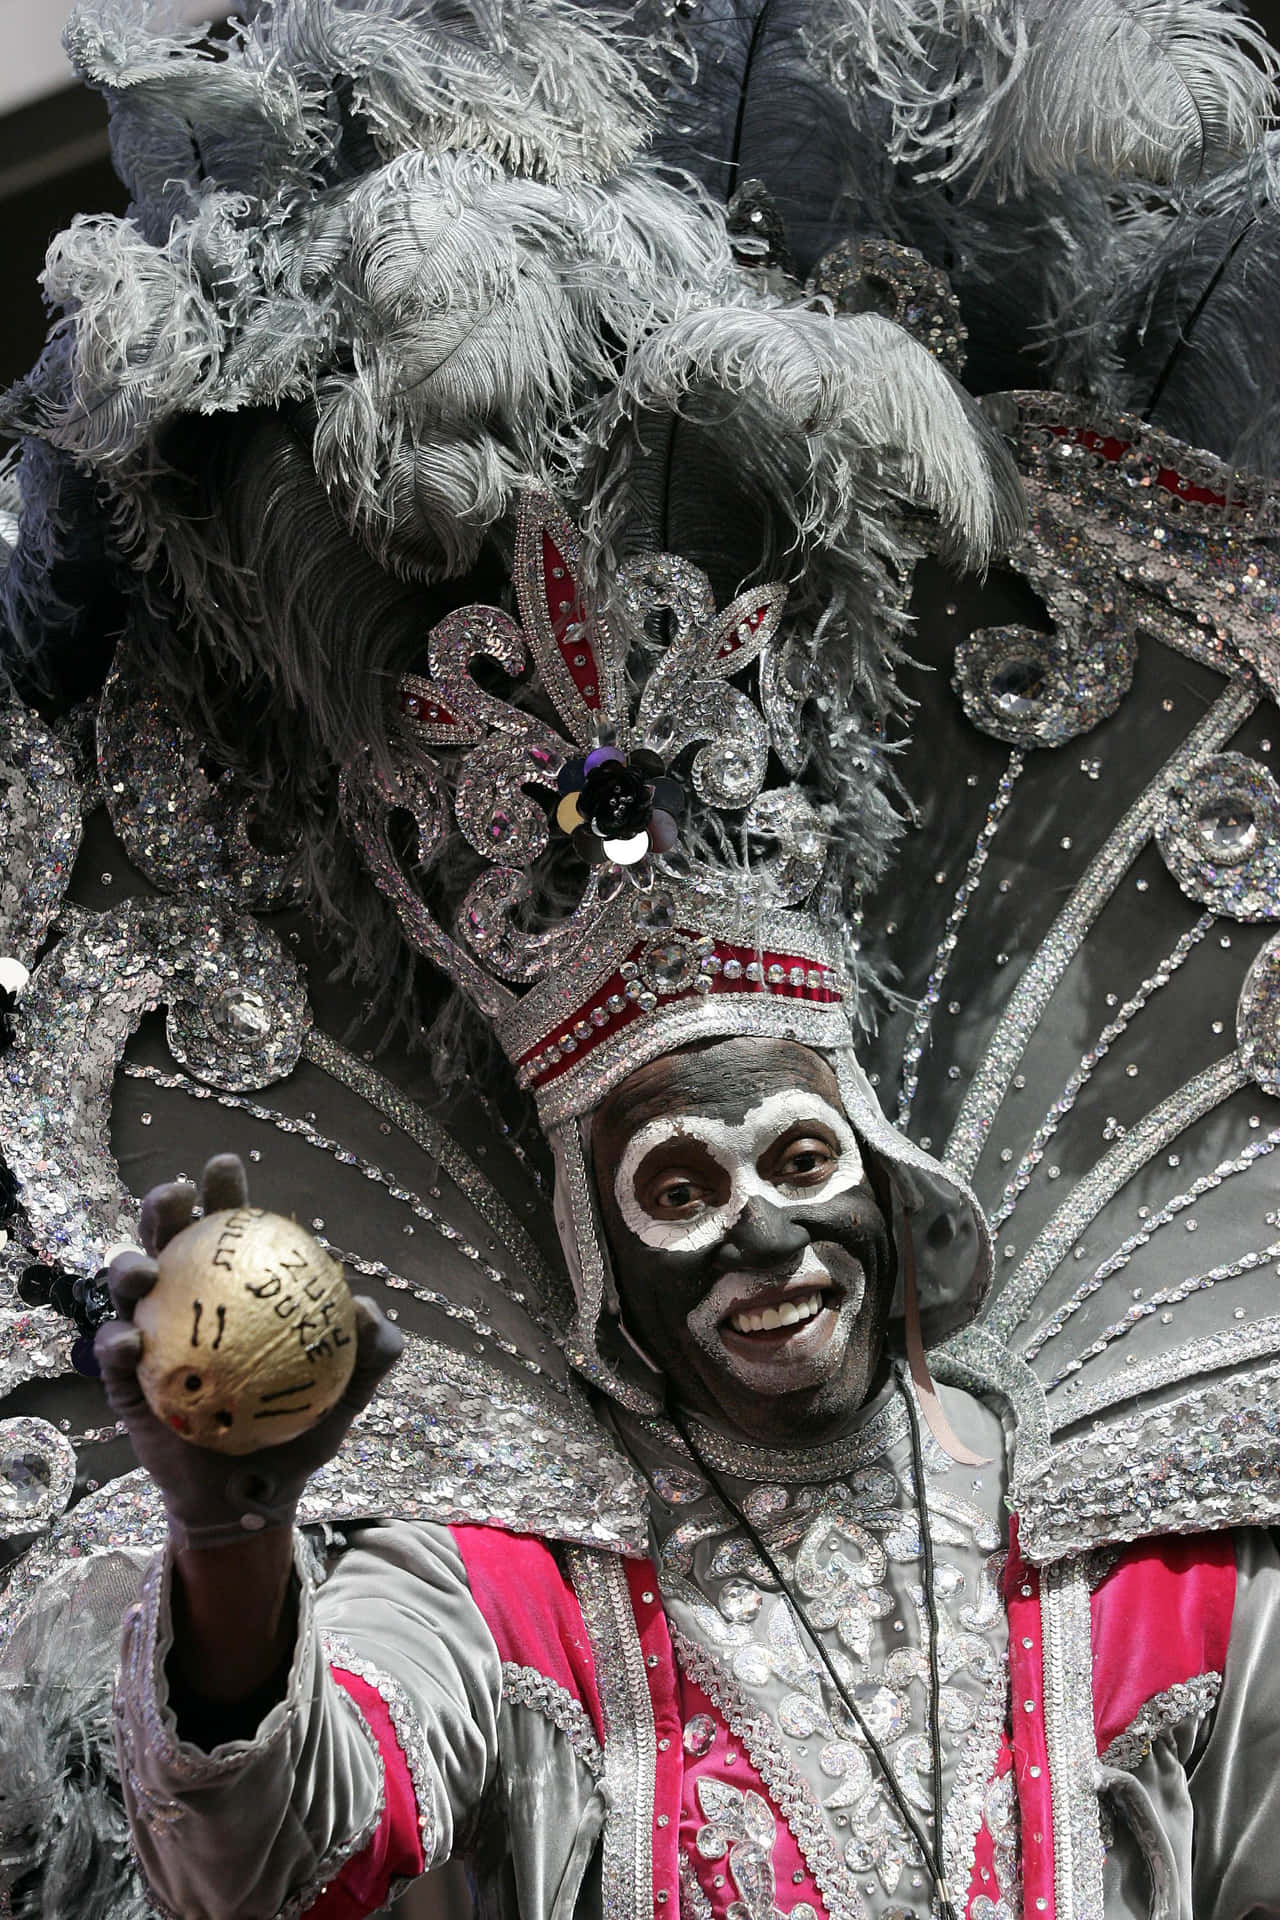 Celebrate Mardi Gras with a Parade and Festive Attire!